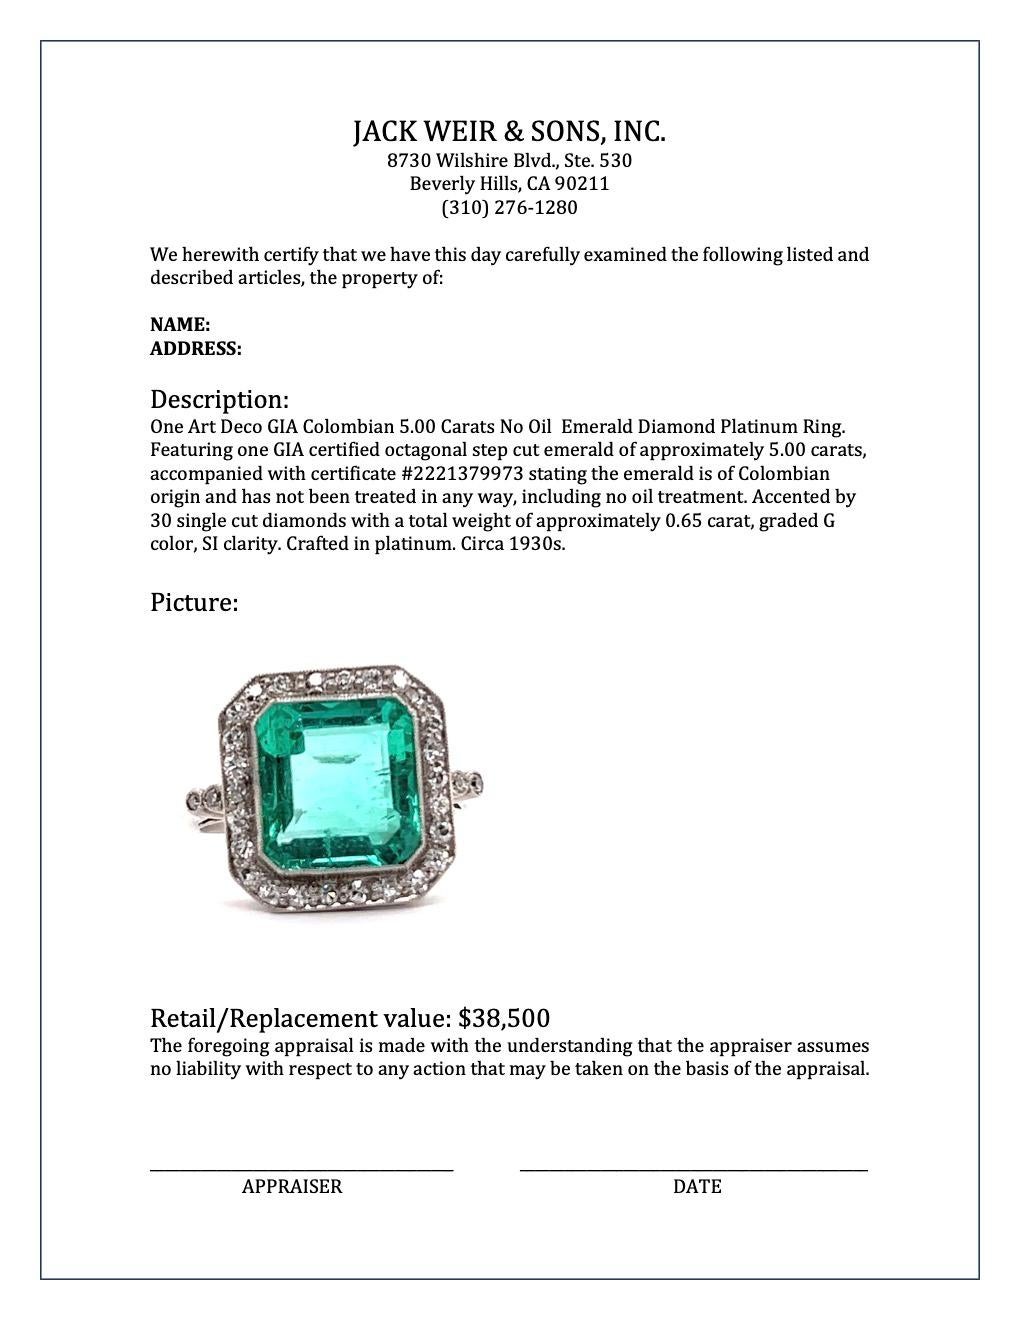 Art Deco GIA Colombian 5.00 Carats No Oil Emerald Diamond Platinum Ring 3